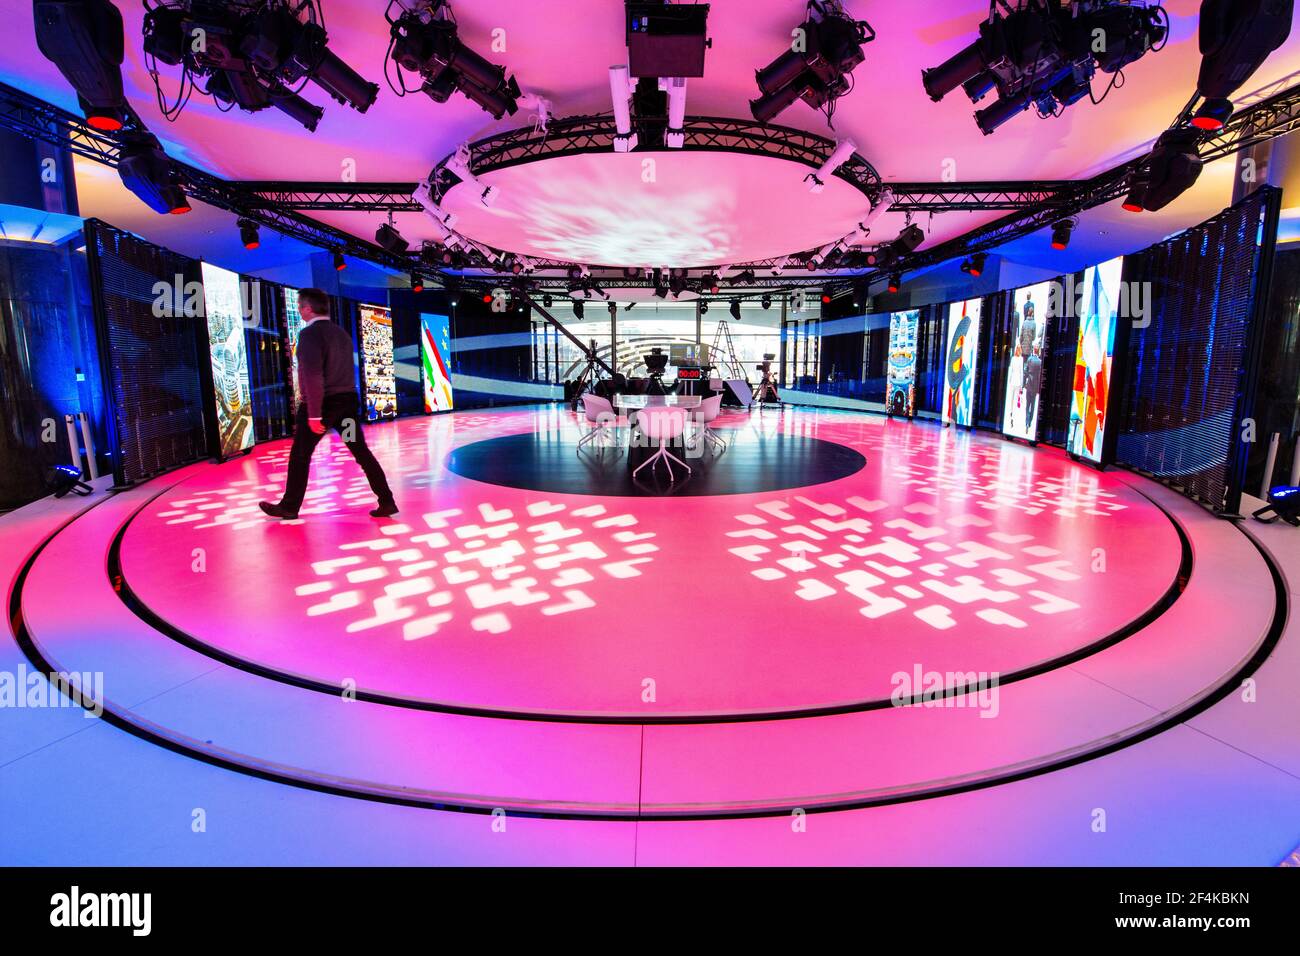 Brüssel, Belgien. Farbenfrohe TV Tonstudio am europäischen Parlamente Gebäude. Stockfoto